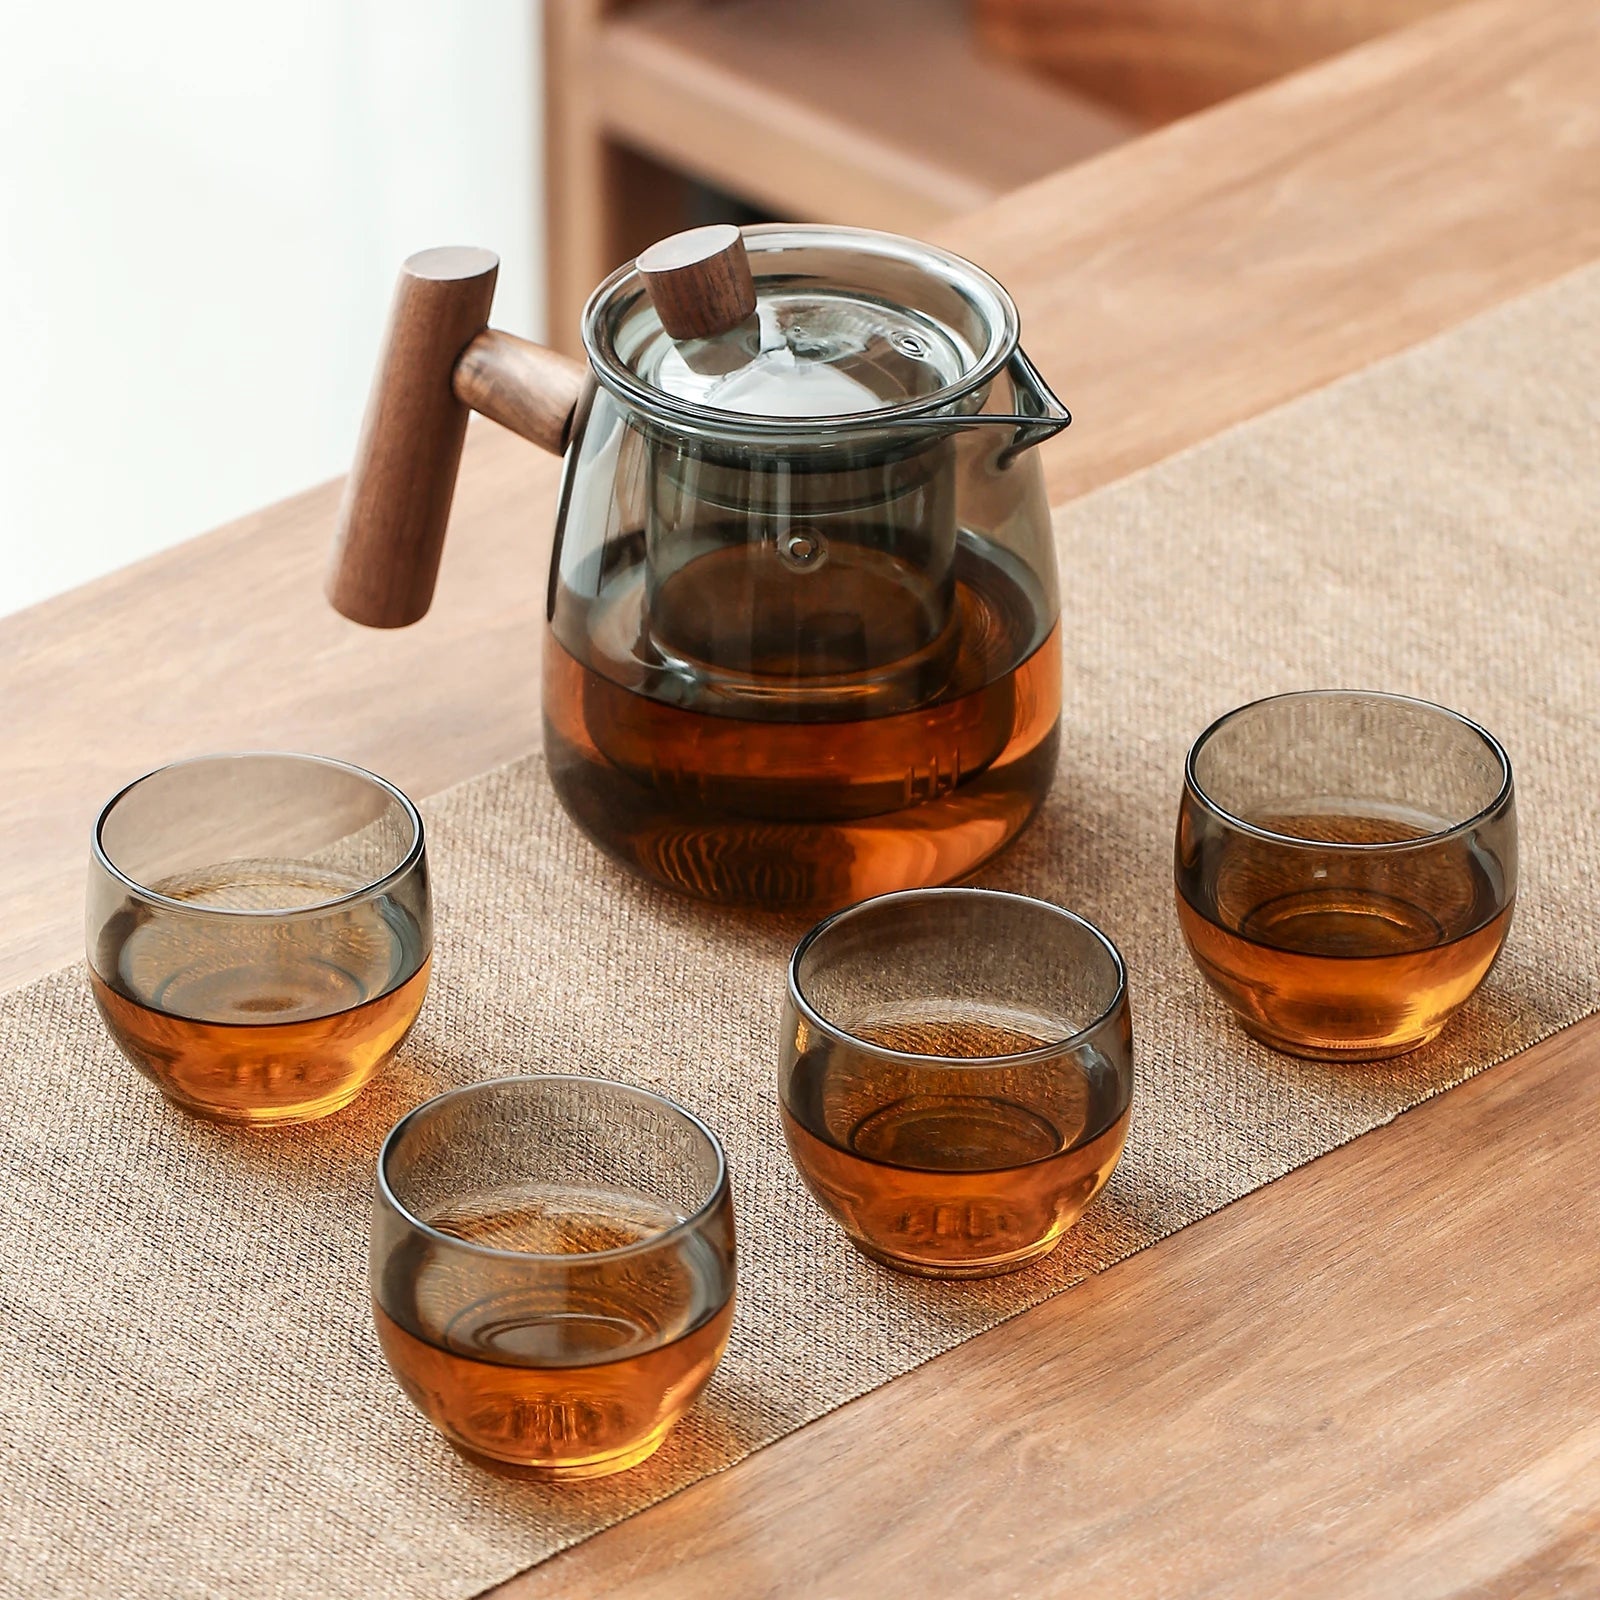 Portable glass infusion tea mug 390ml with lid and filter